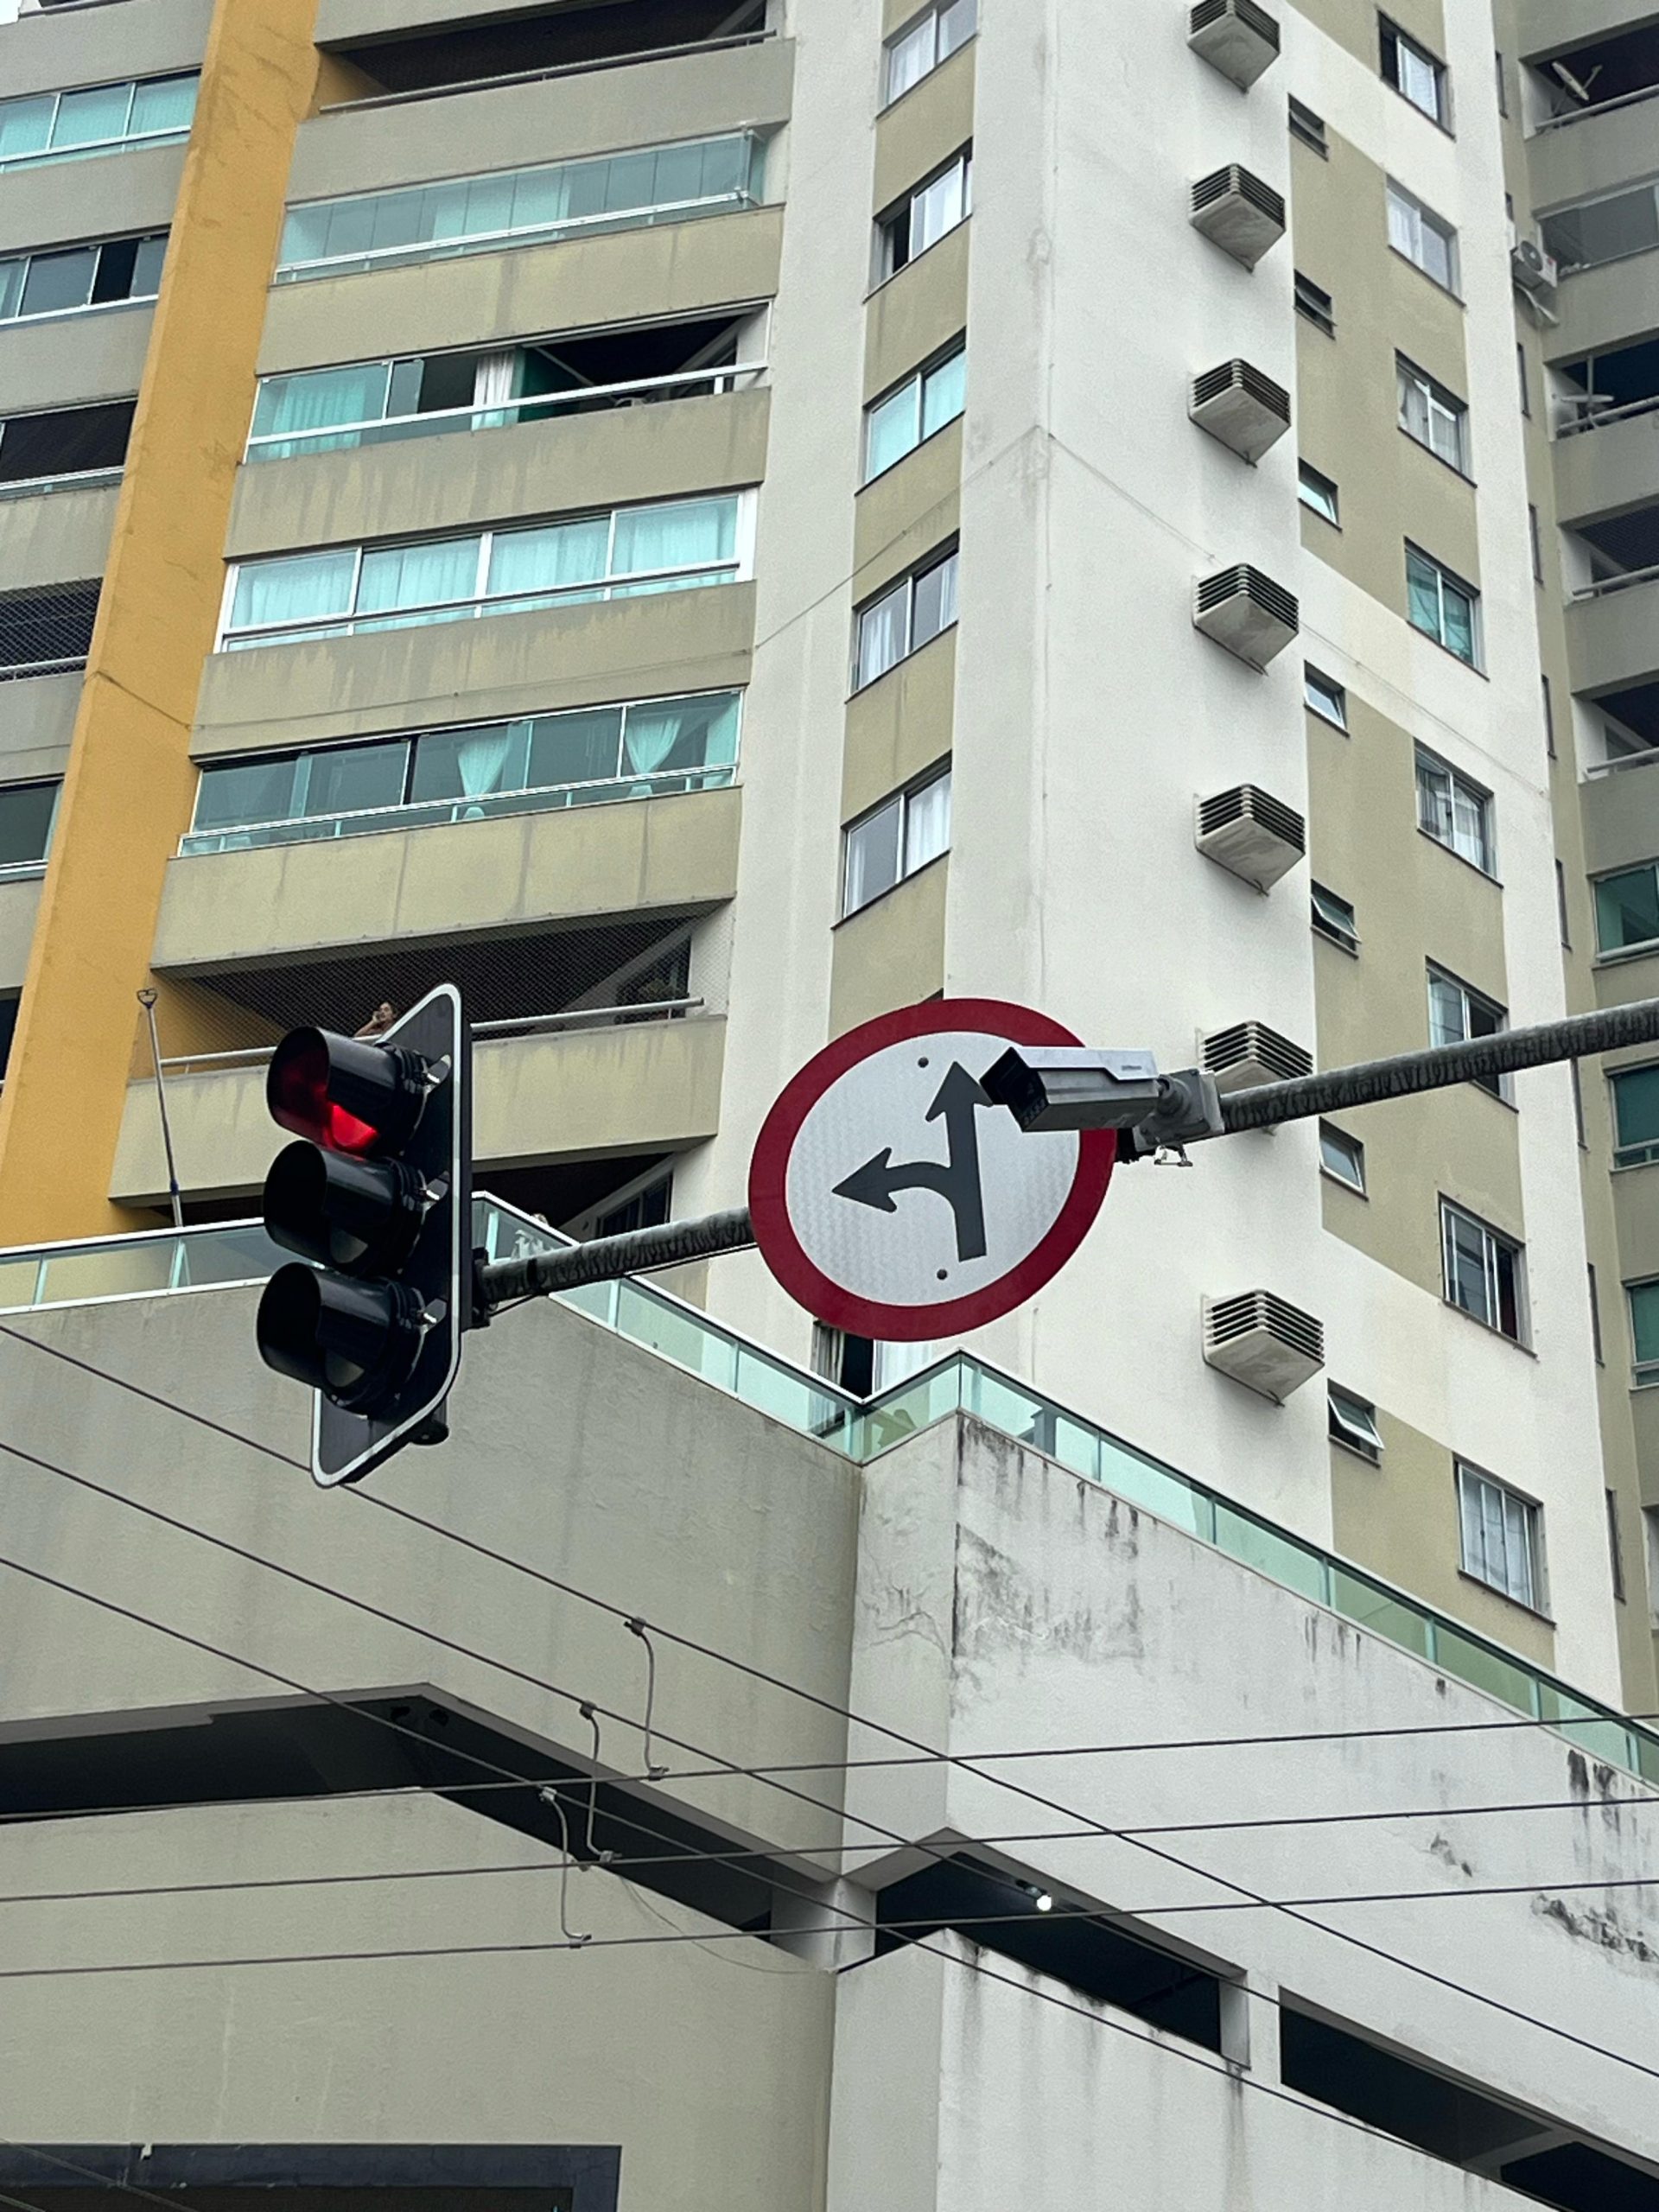 Balneário Camboriú passa a dispor de semáforos inteligentes